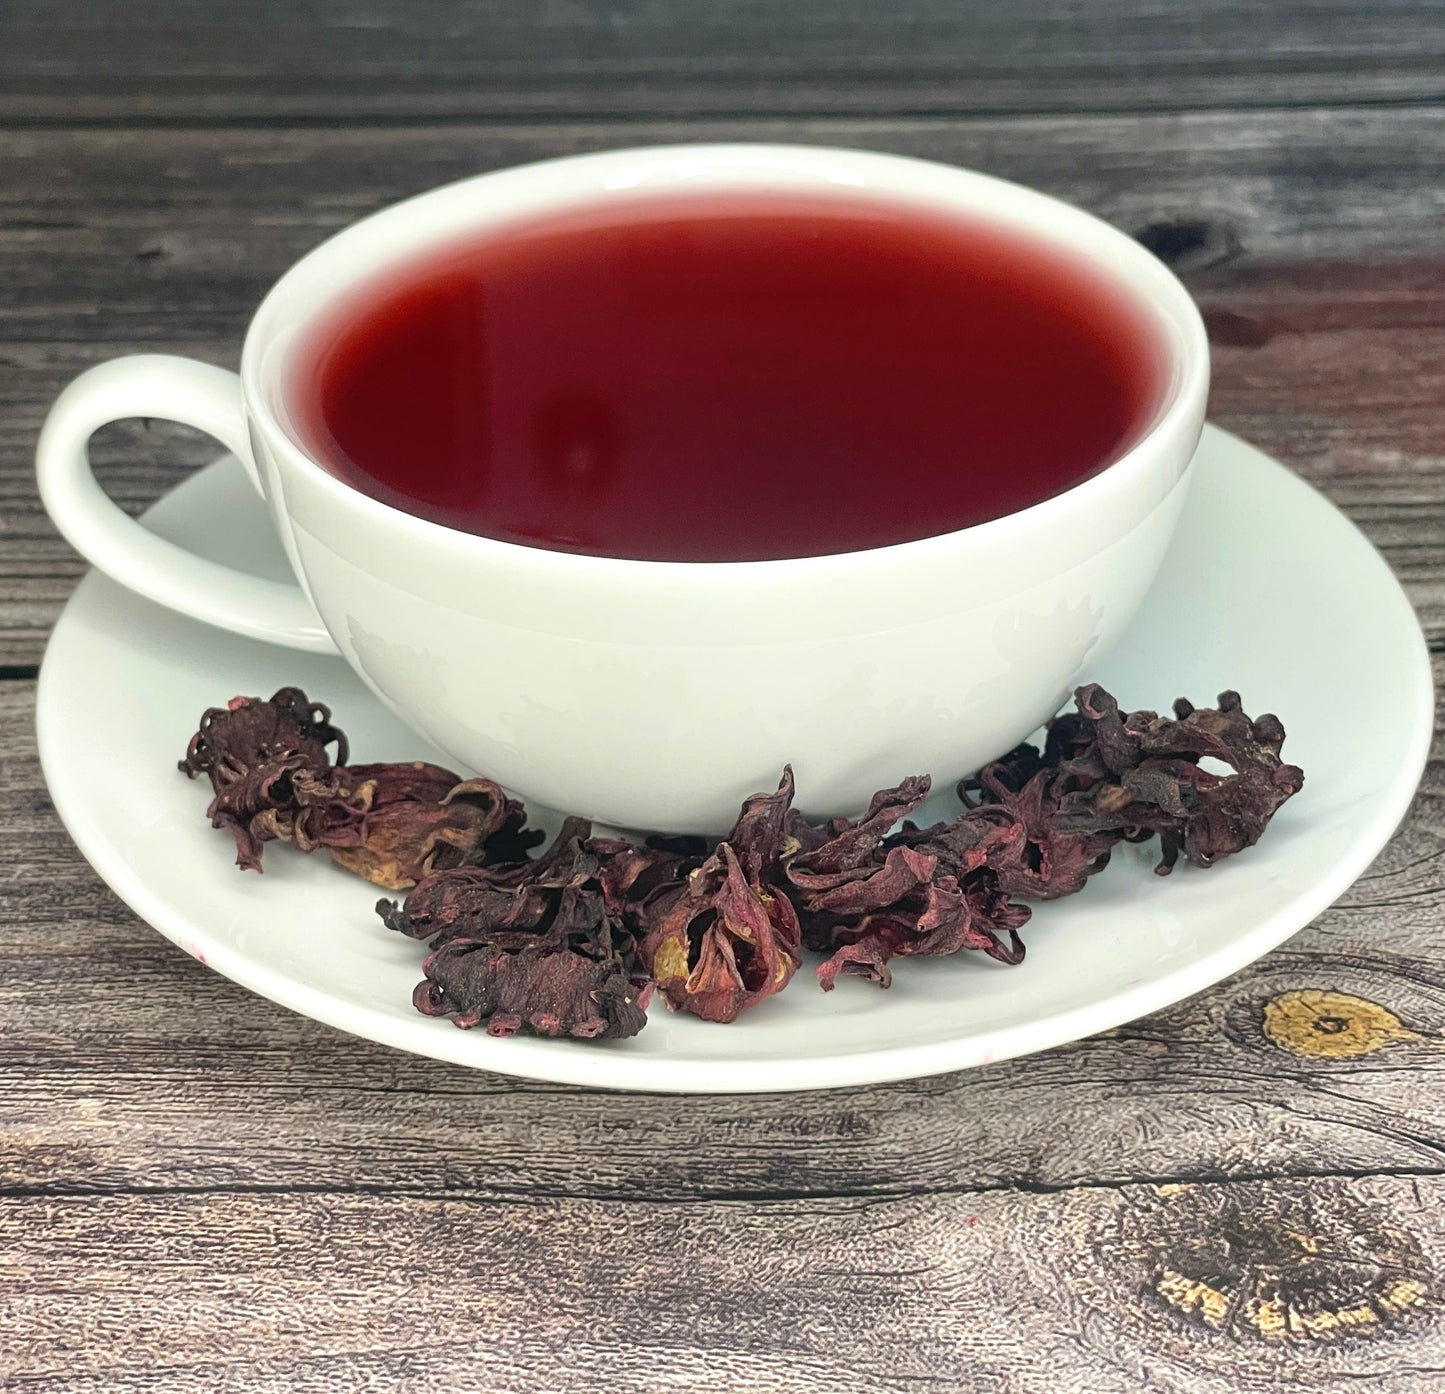 Red Roselle Hibiscus Flower Tea